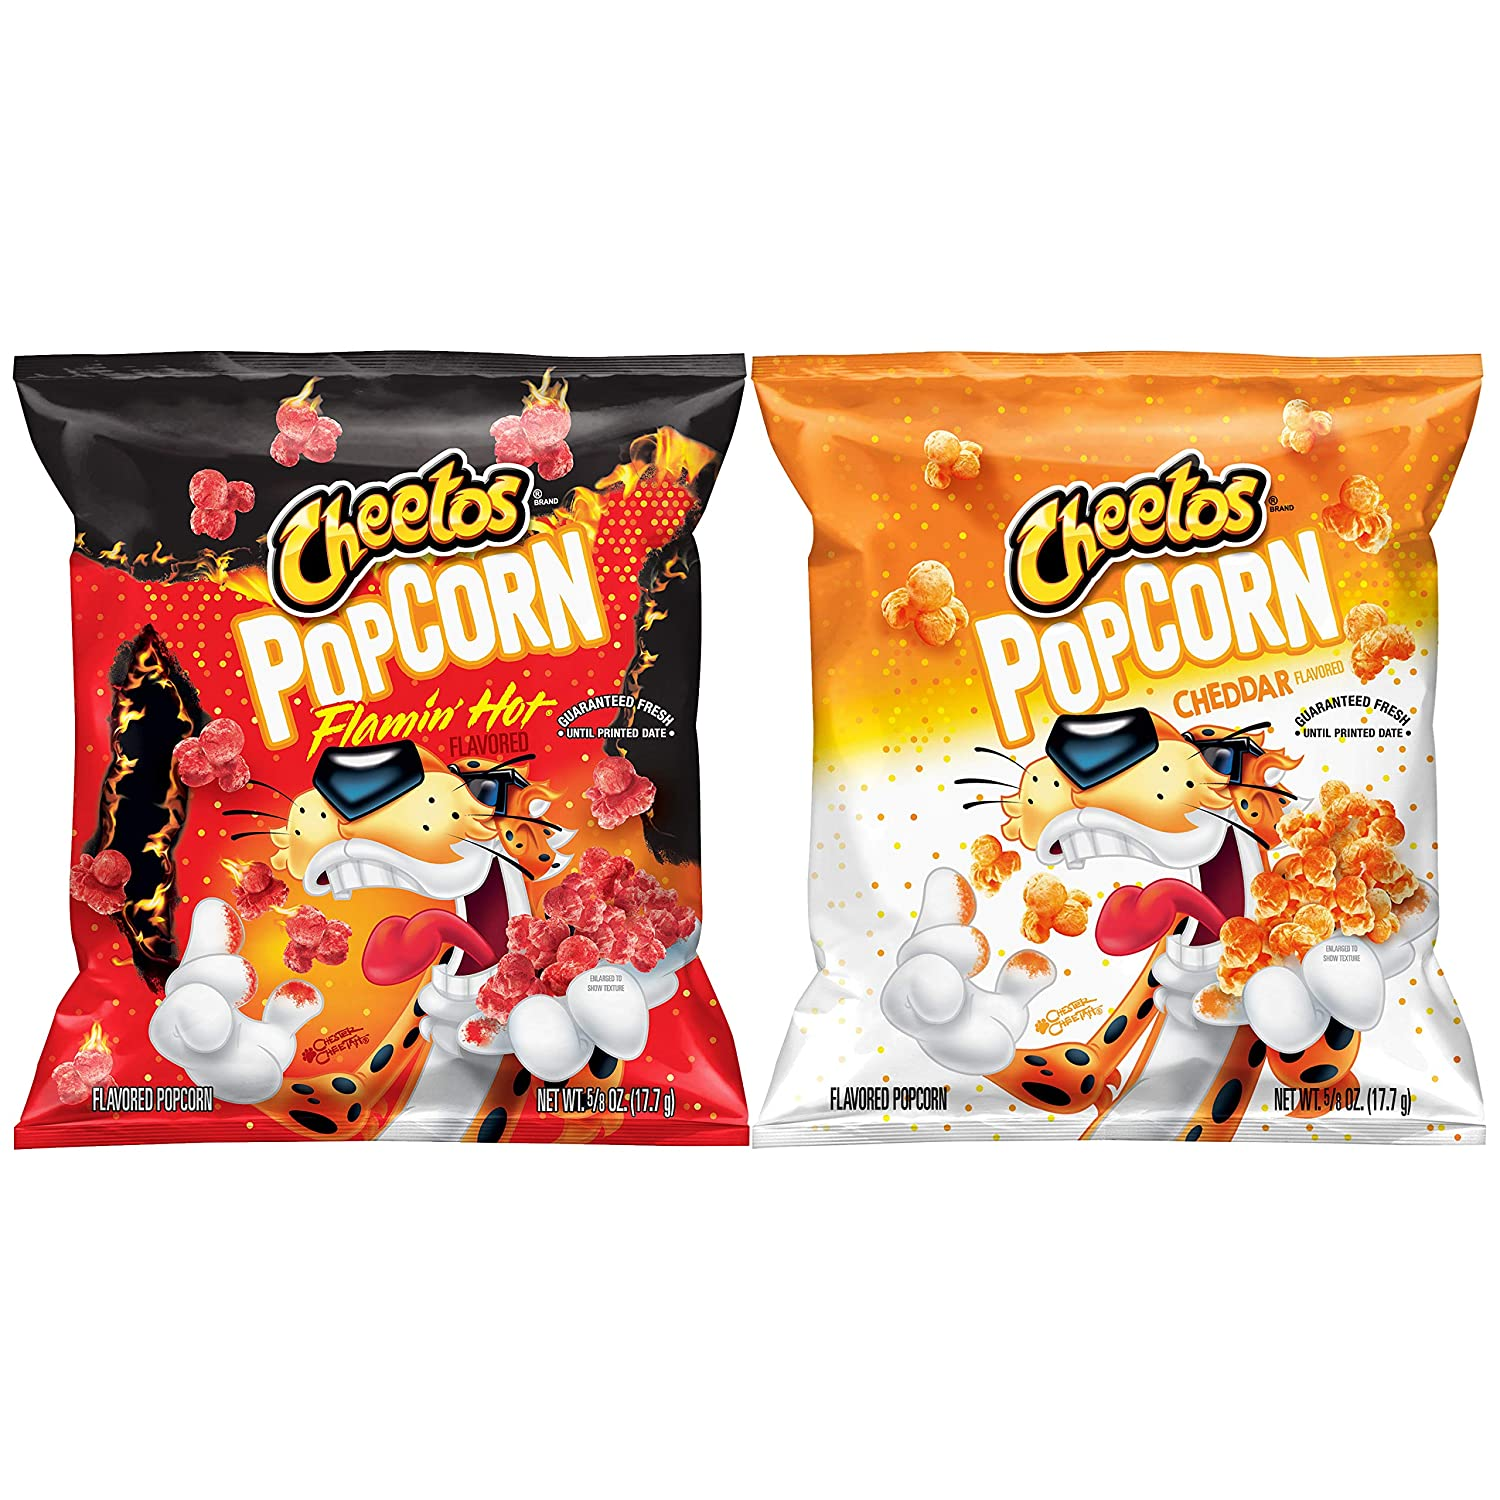 Amazon.com : Cheetos Popcorn, Cheddar & Flamin' Hot Variety Pack, 0.625oz Bags (40 Pack) $10.30